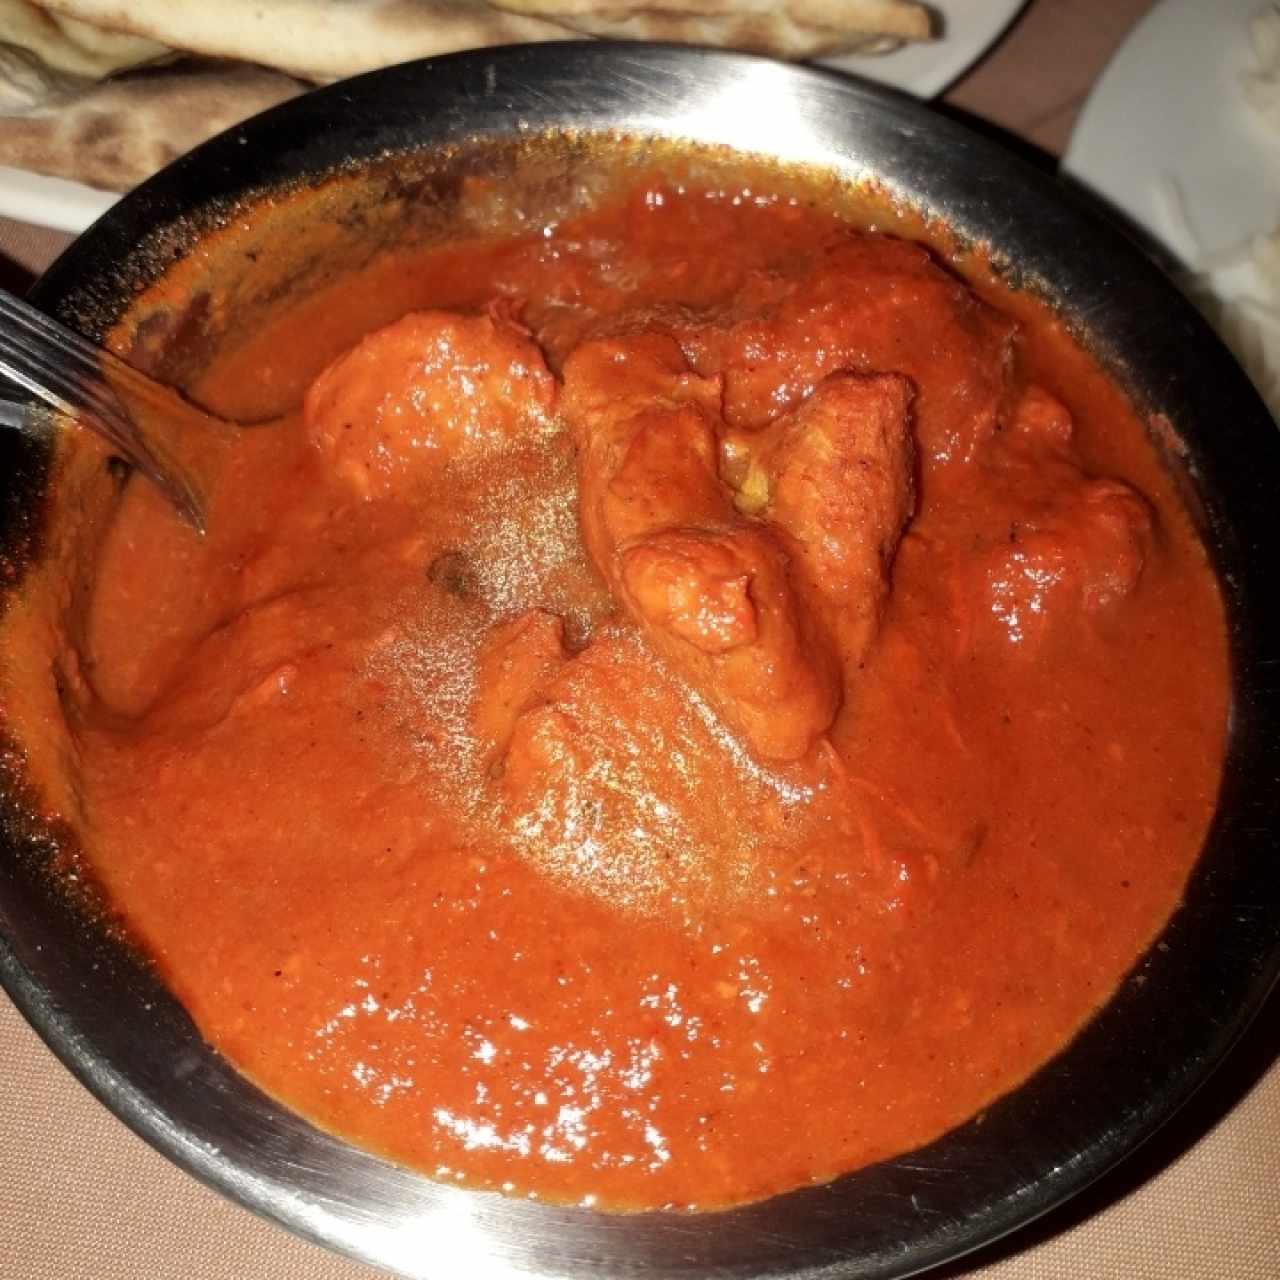 Chicken Tikka Massala